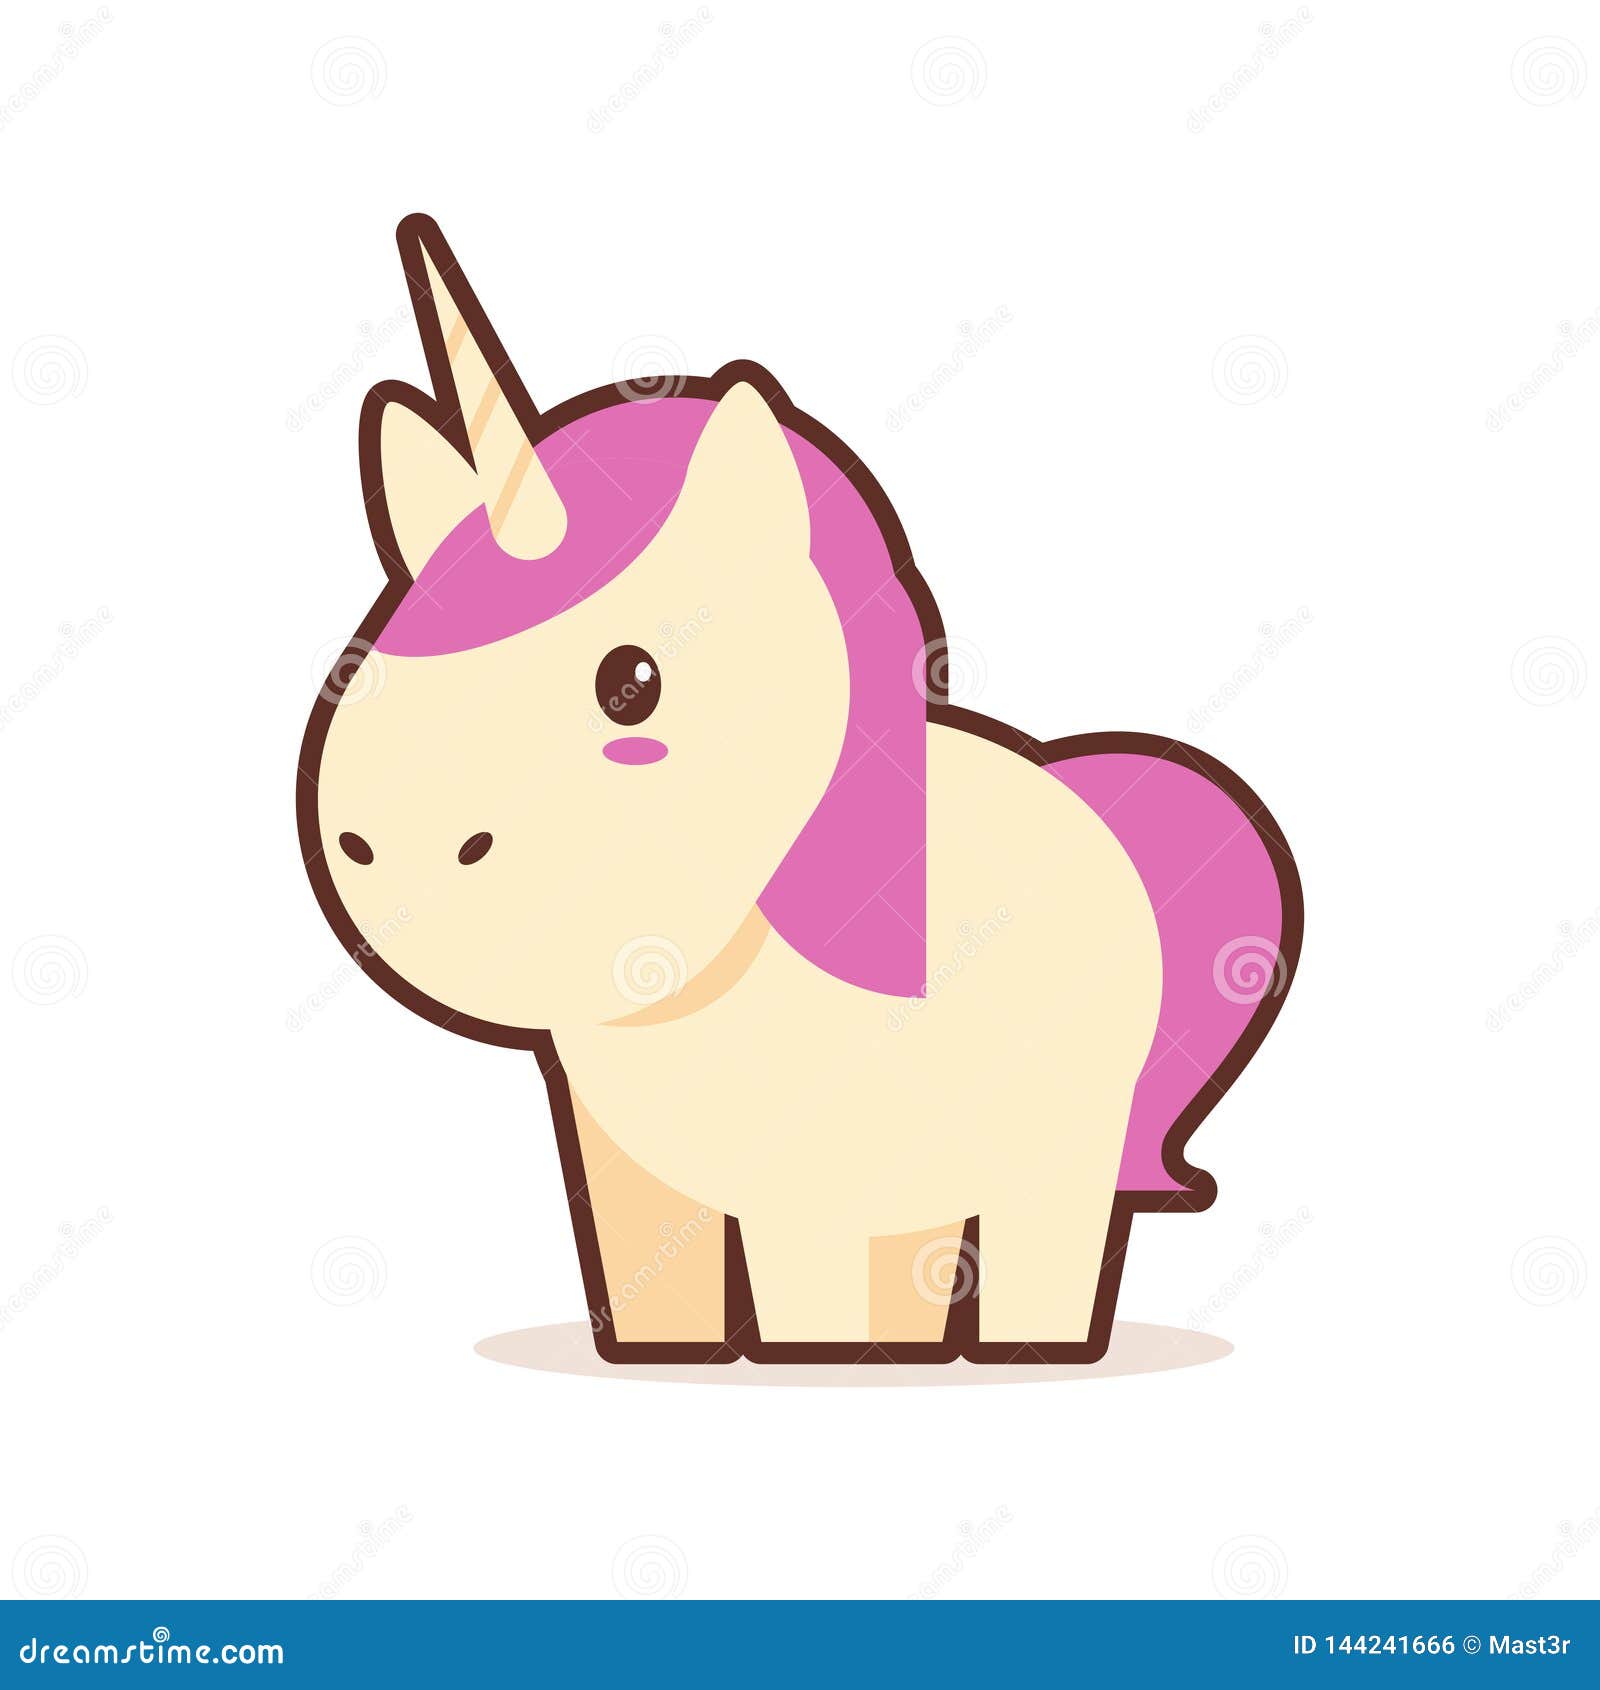 Premium Vector | Cute unicorn anime style